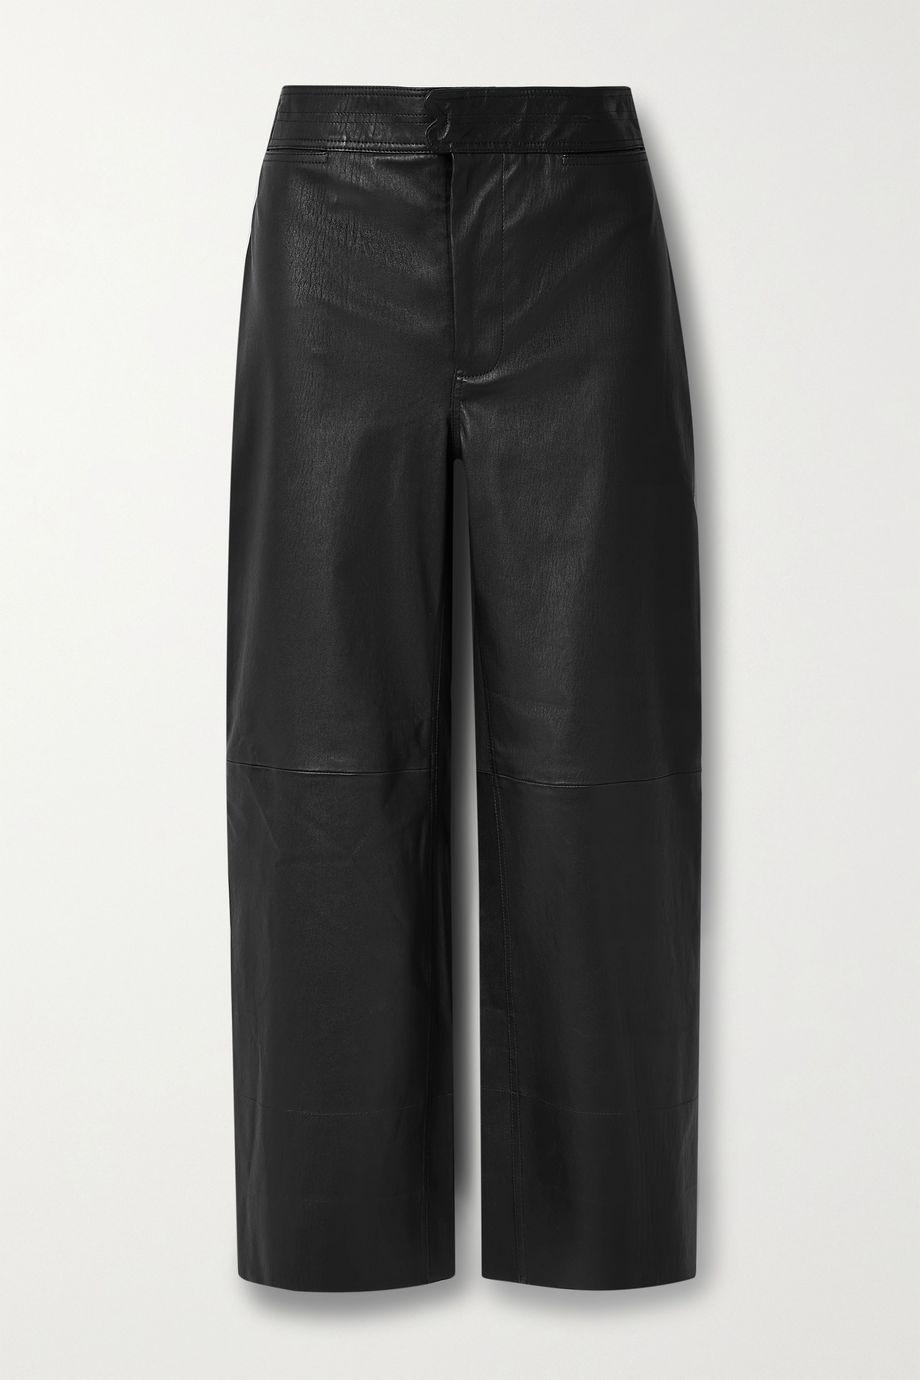 Monterey leather straight-leg pants by APIECE APART